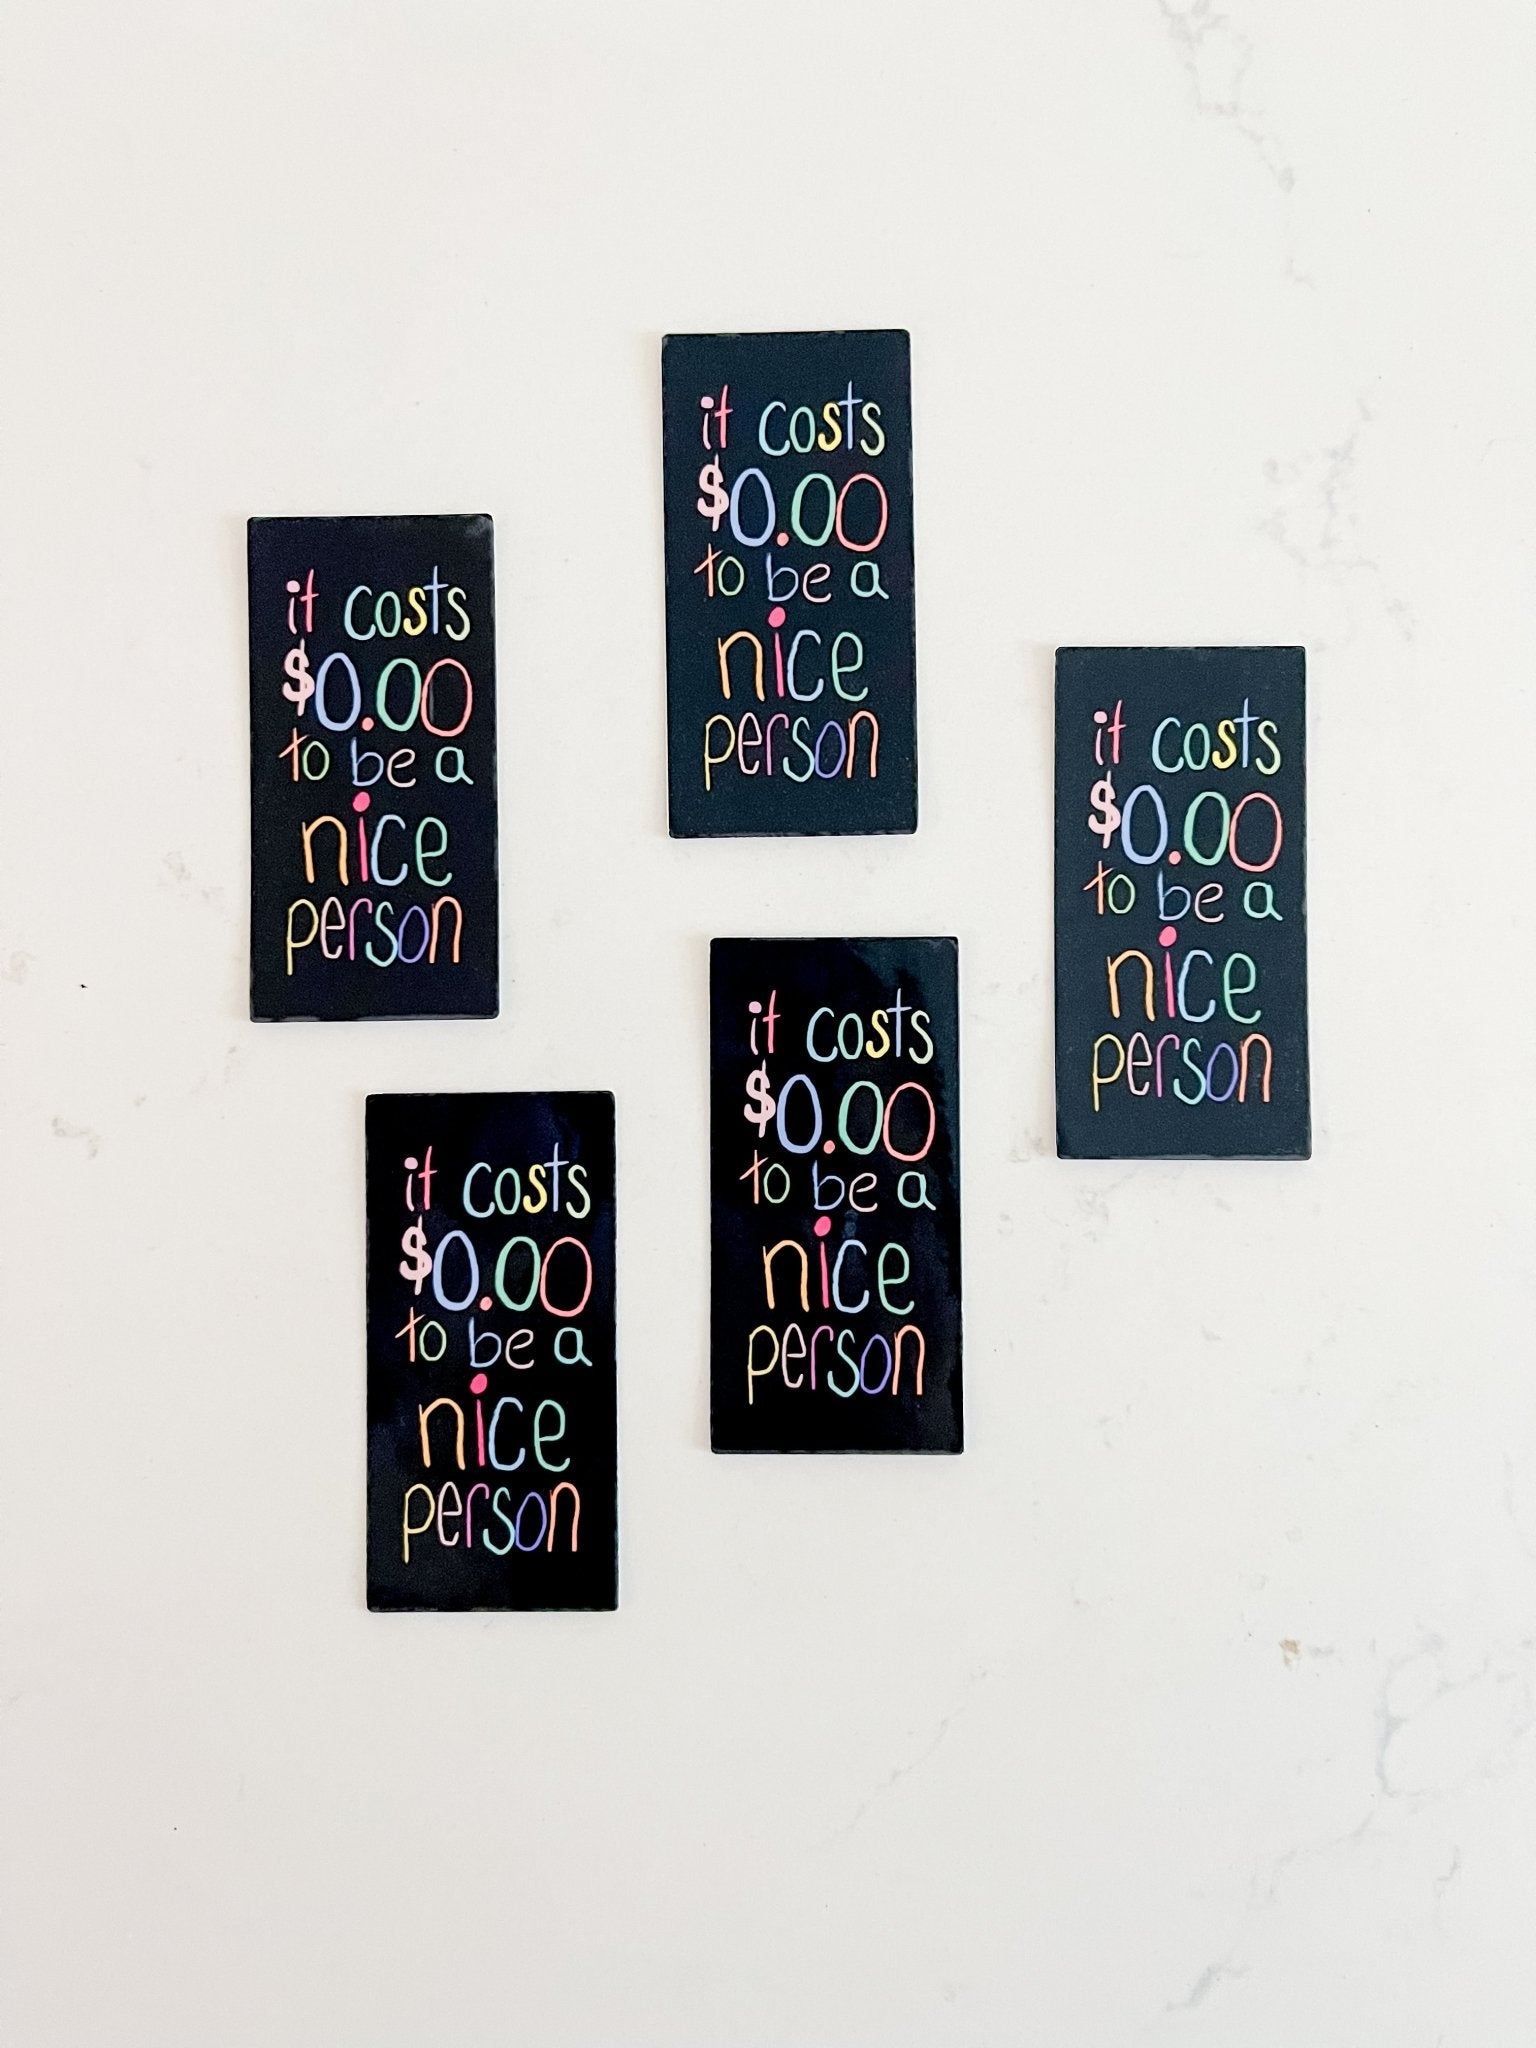 Free To Be Nice Sticker - Designs by Lauren Ann